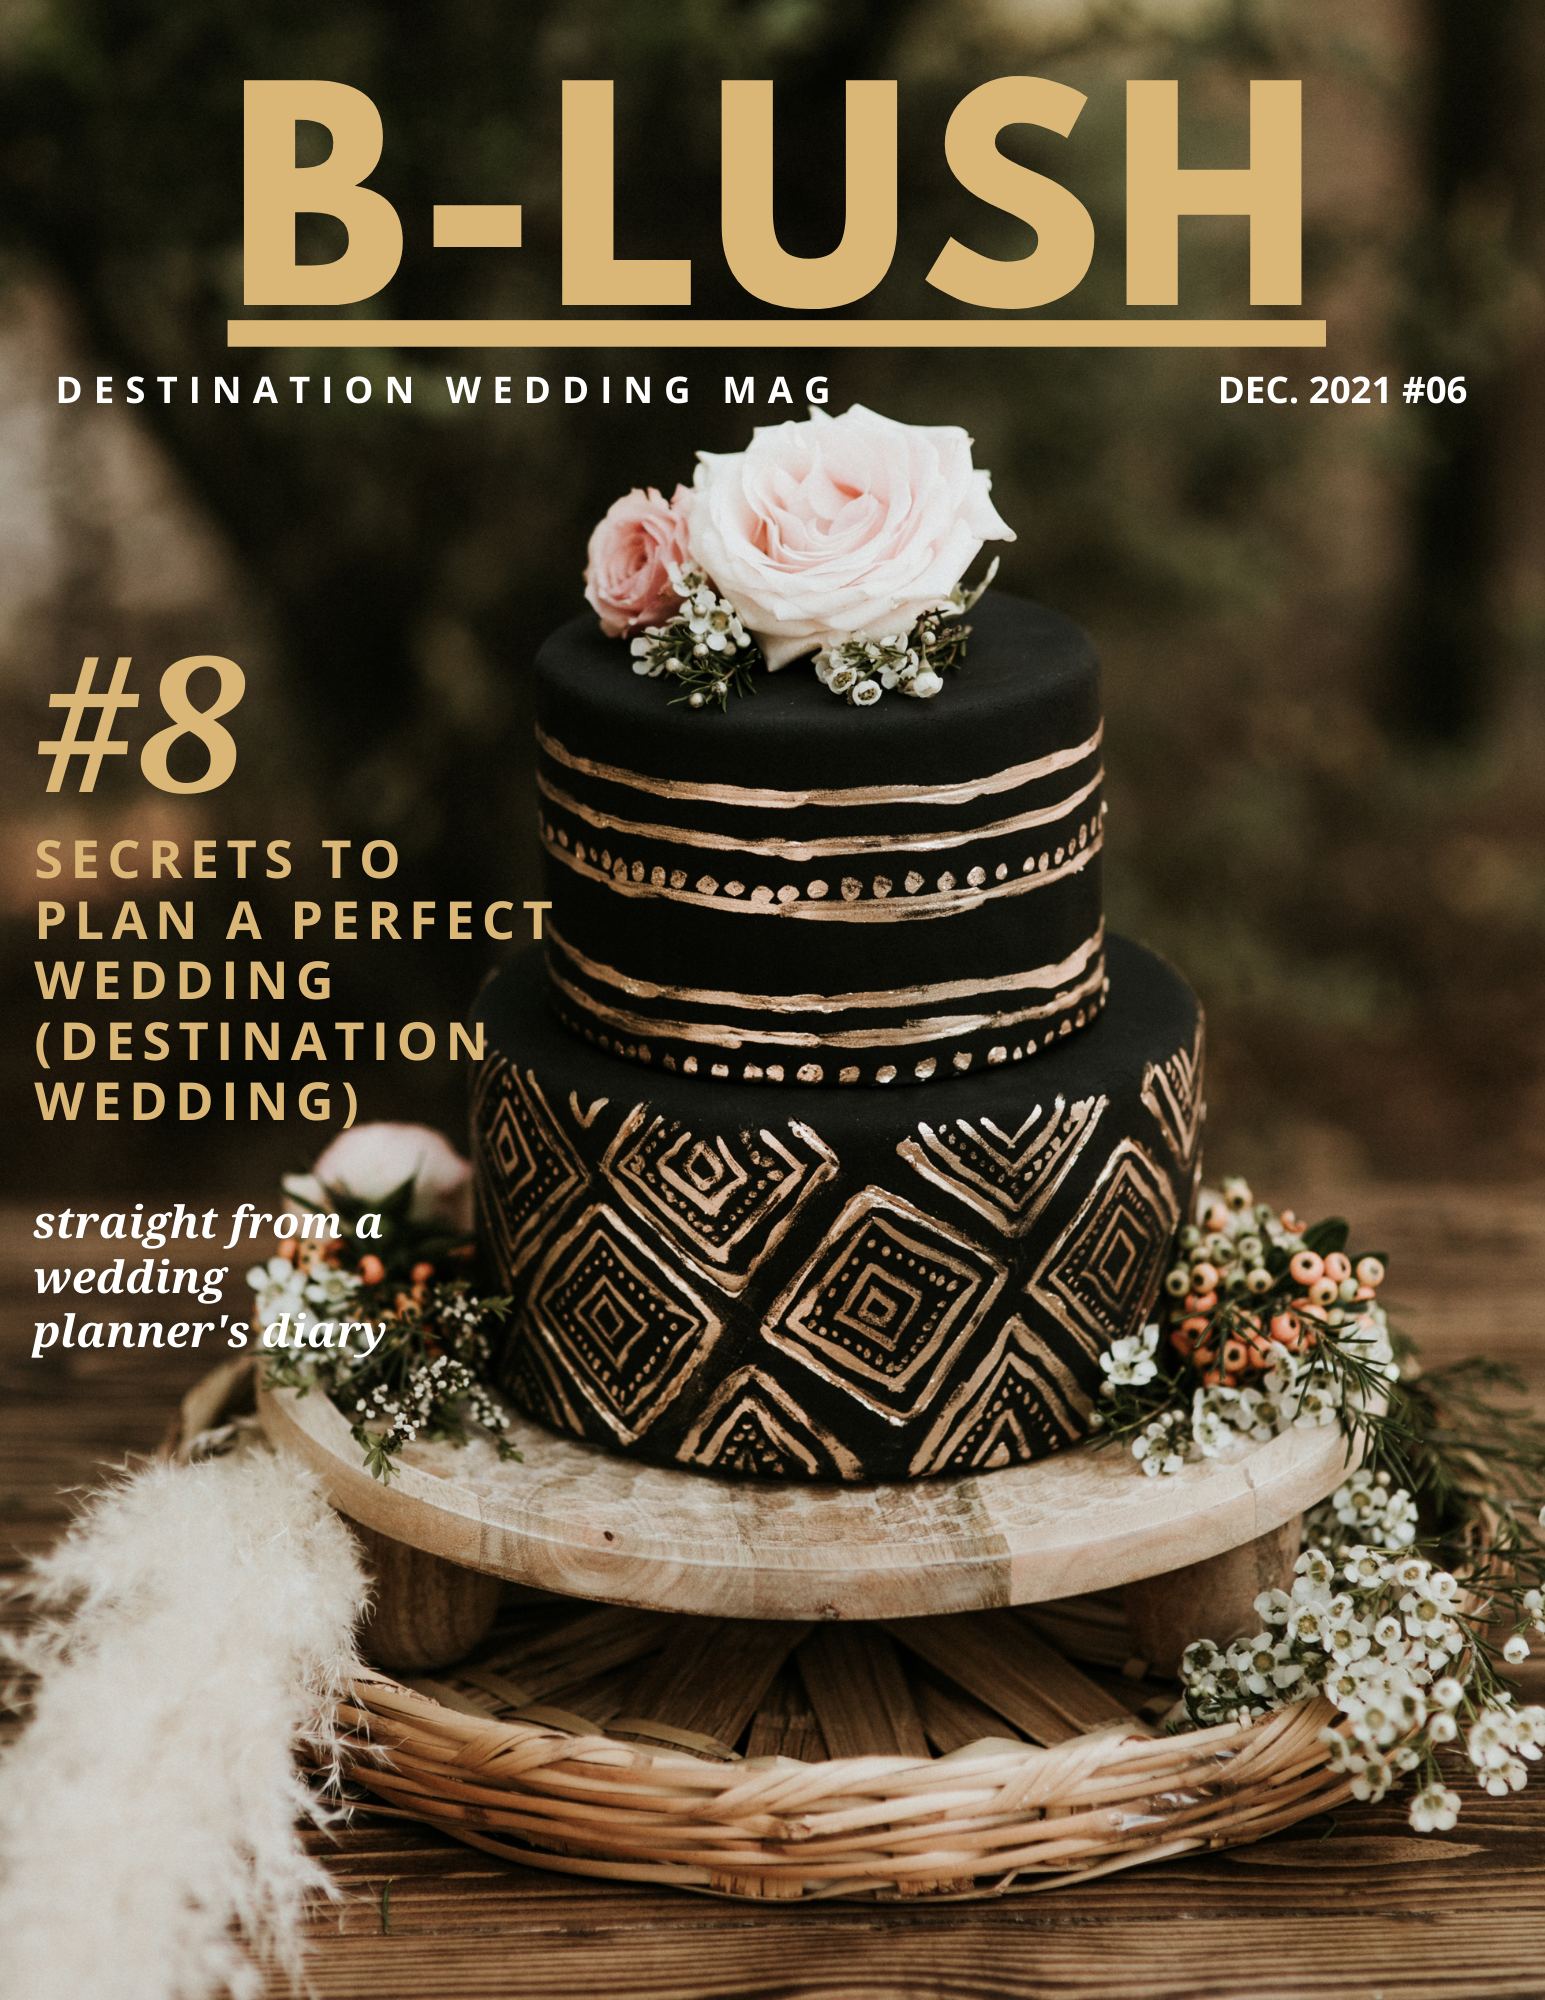 Blush6 destination wedding mag